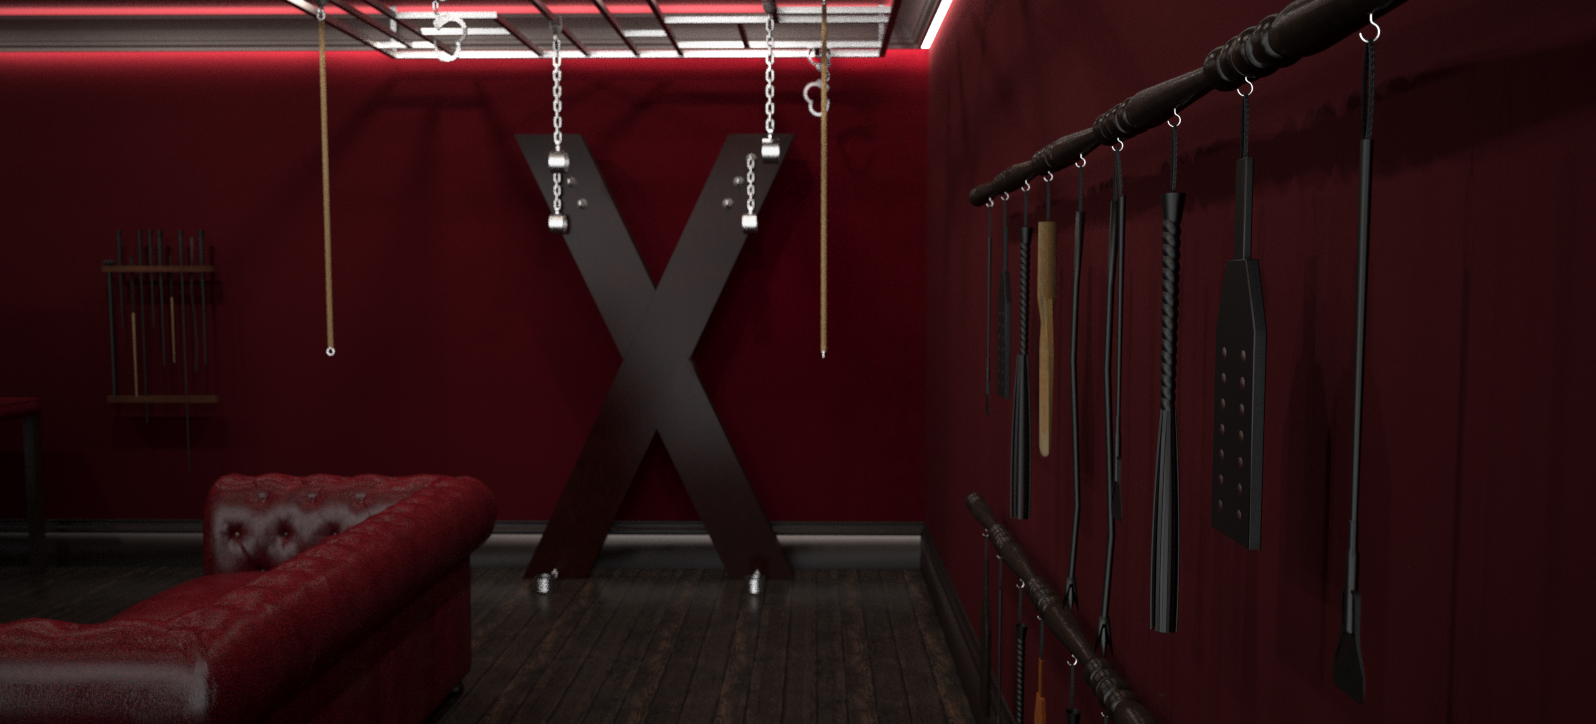 Красная комната 50 оттенков серого фото